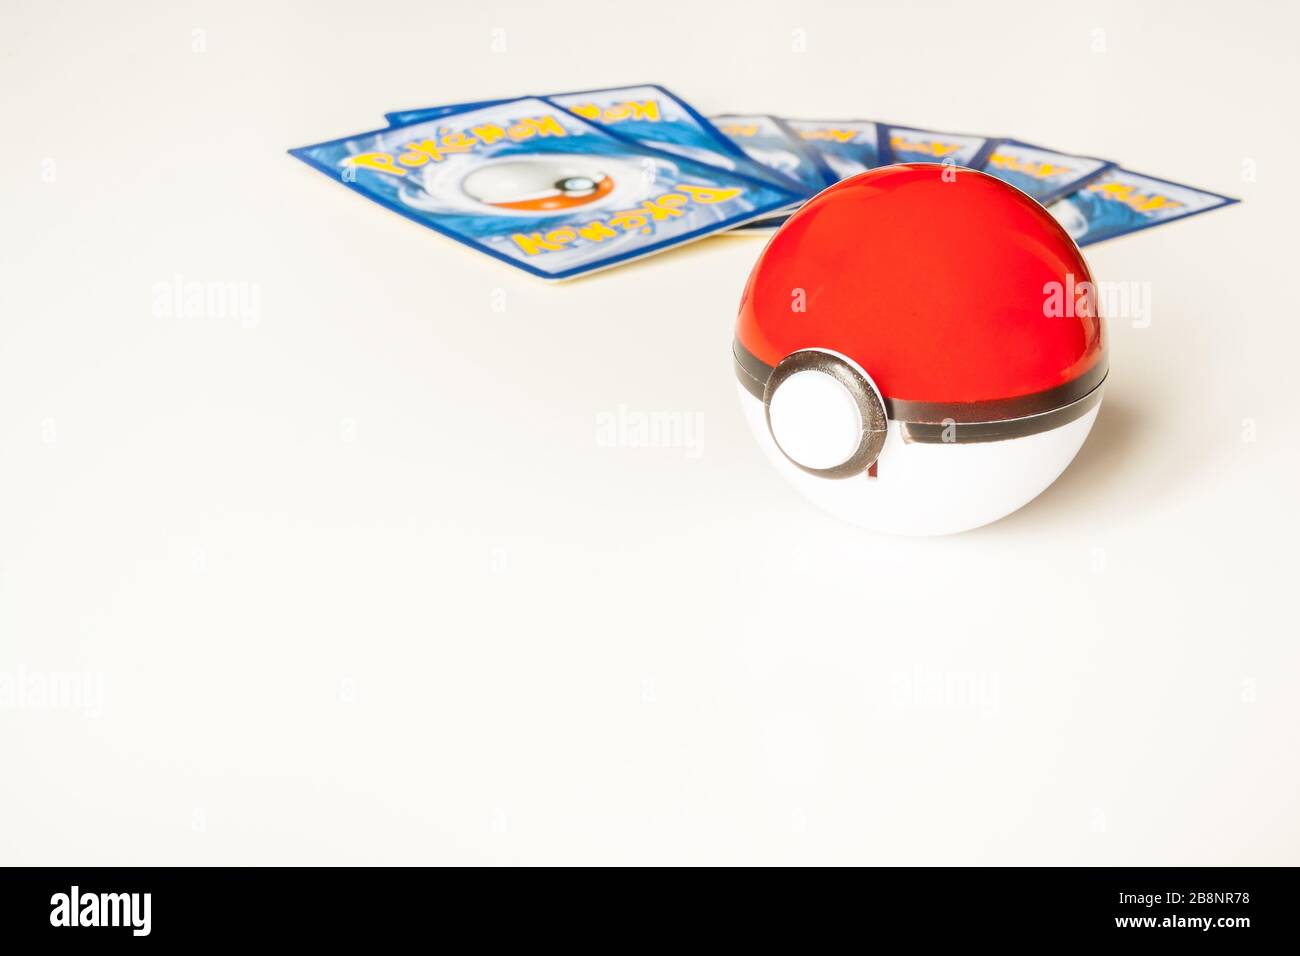 Game Pokeball Outline Icon Pokemon Container Vector Illustration